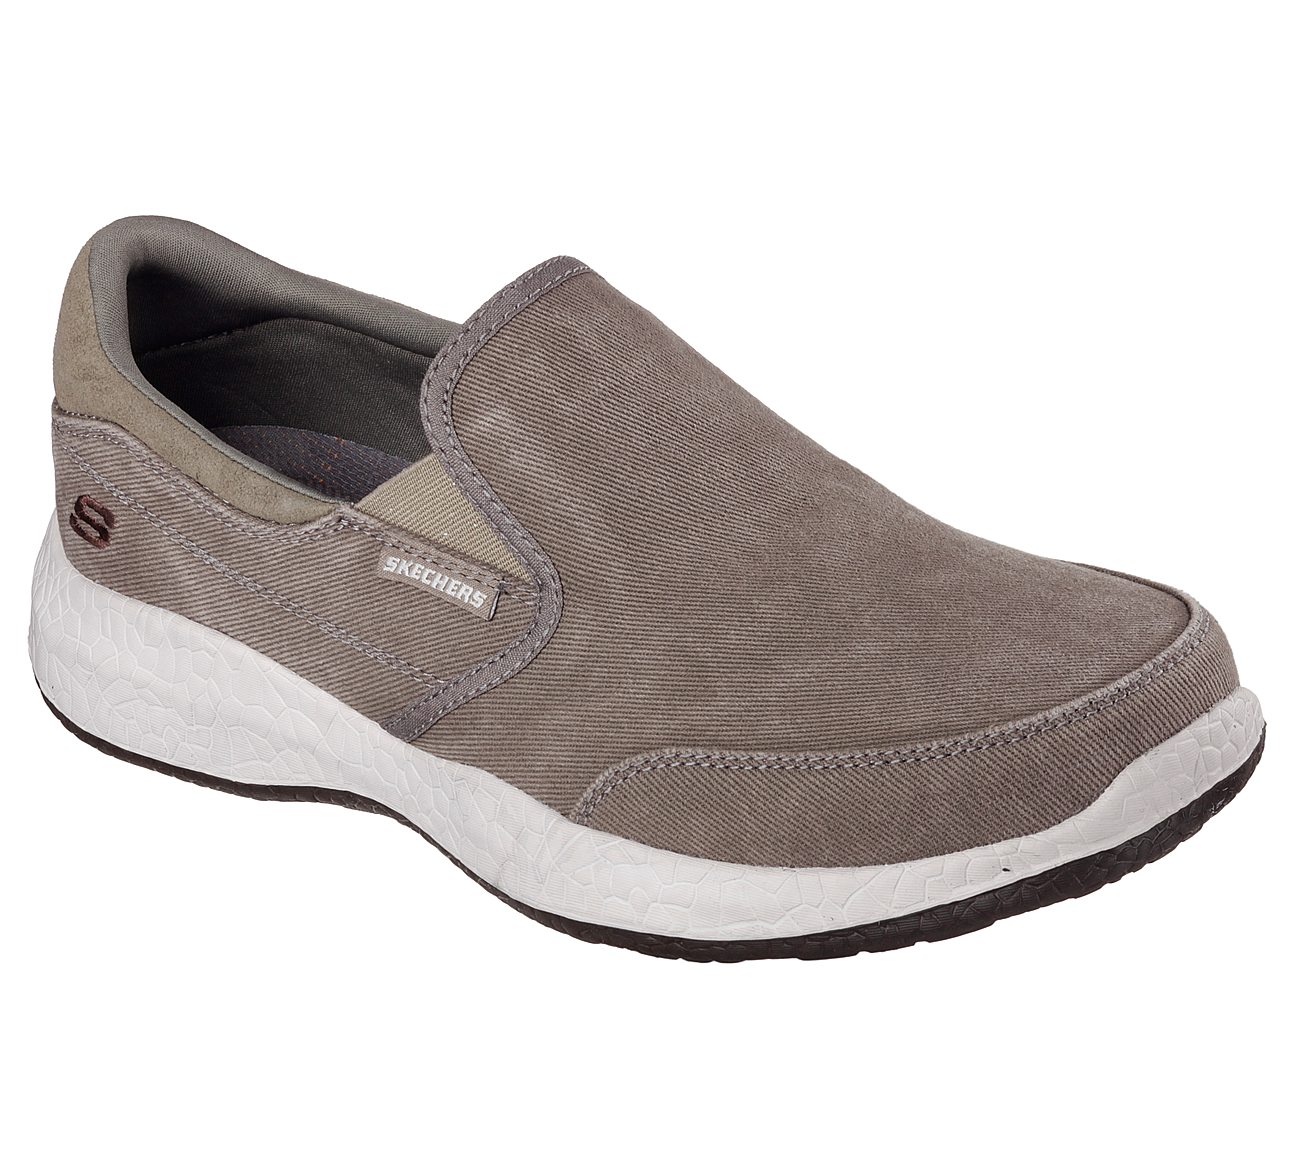 Buy SKECHERS Relaxed Fit: Bursen - Elkin USA Casuals Shoes